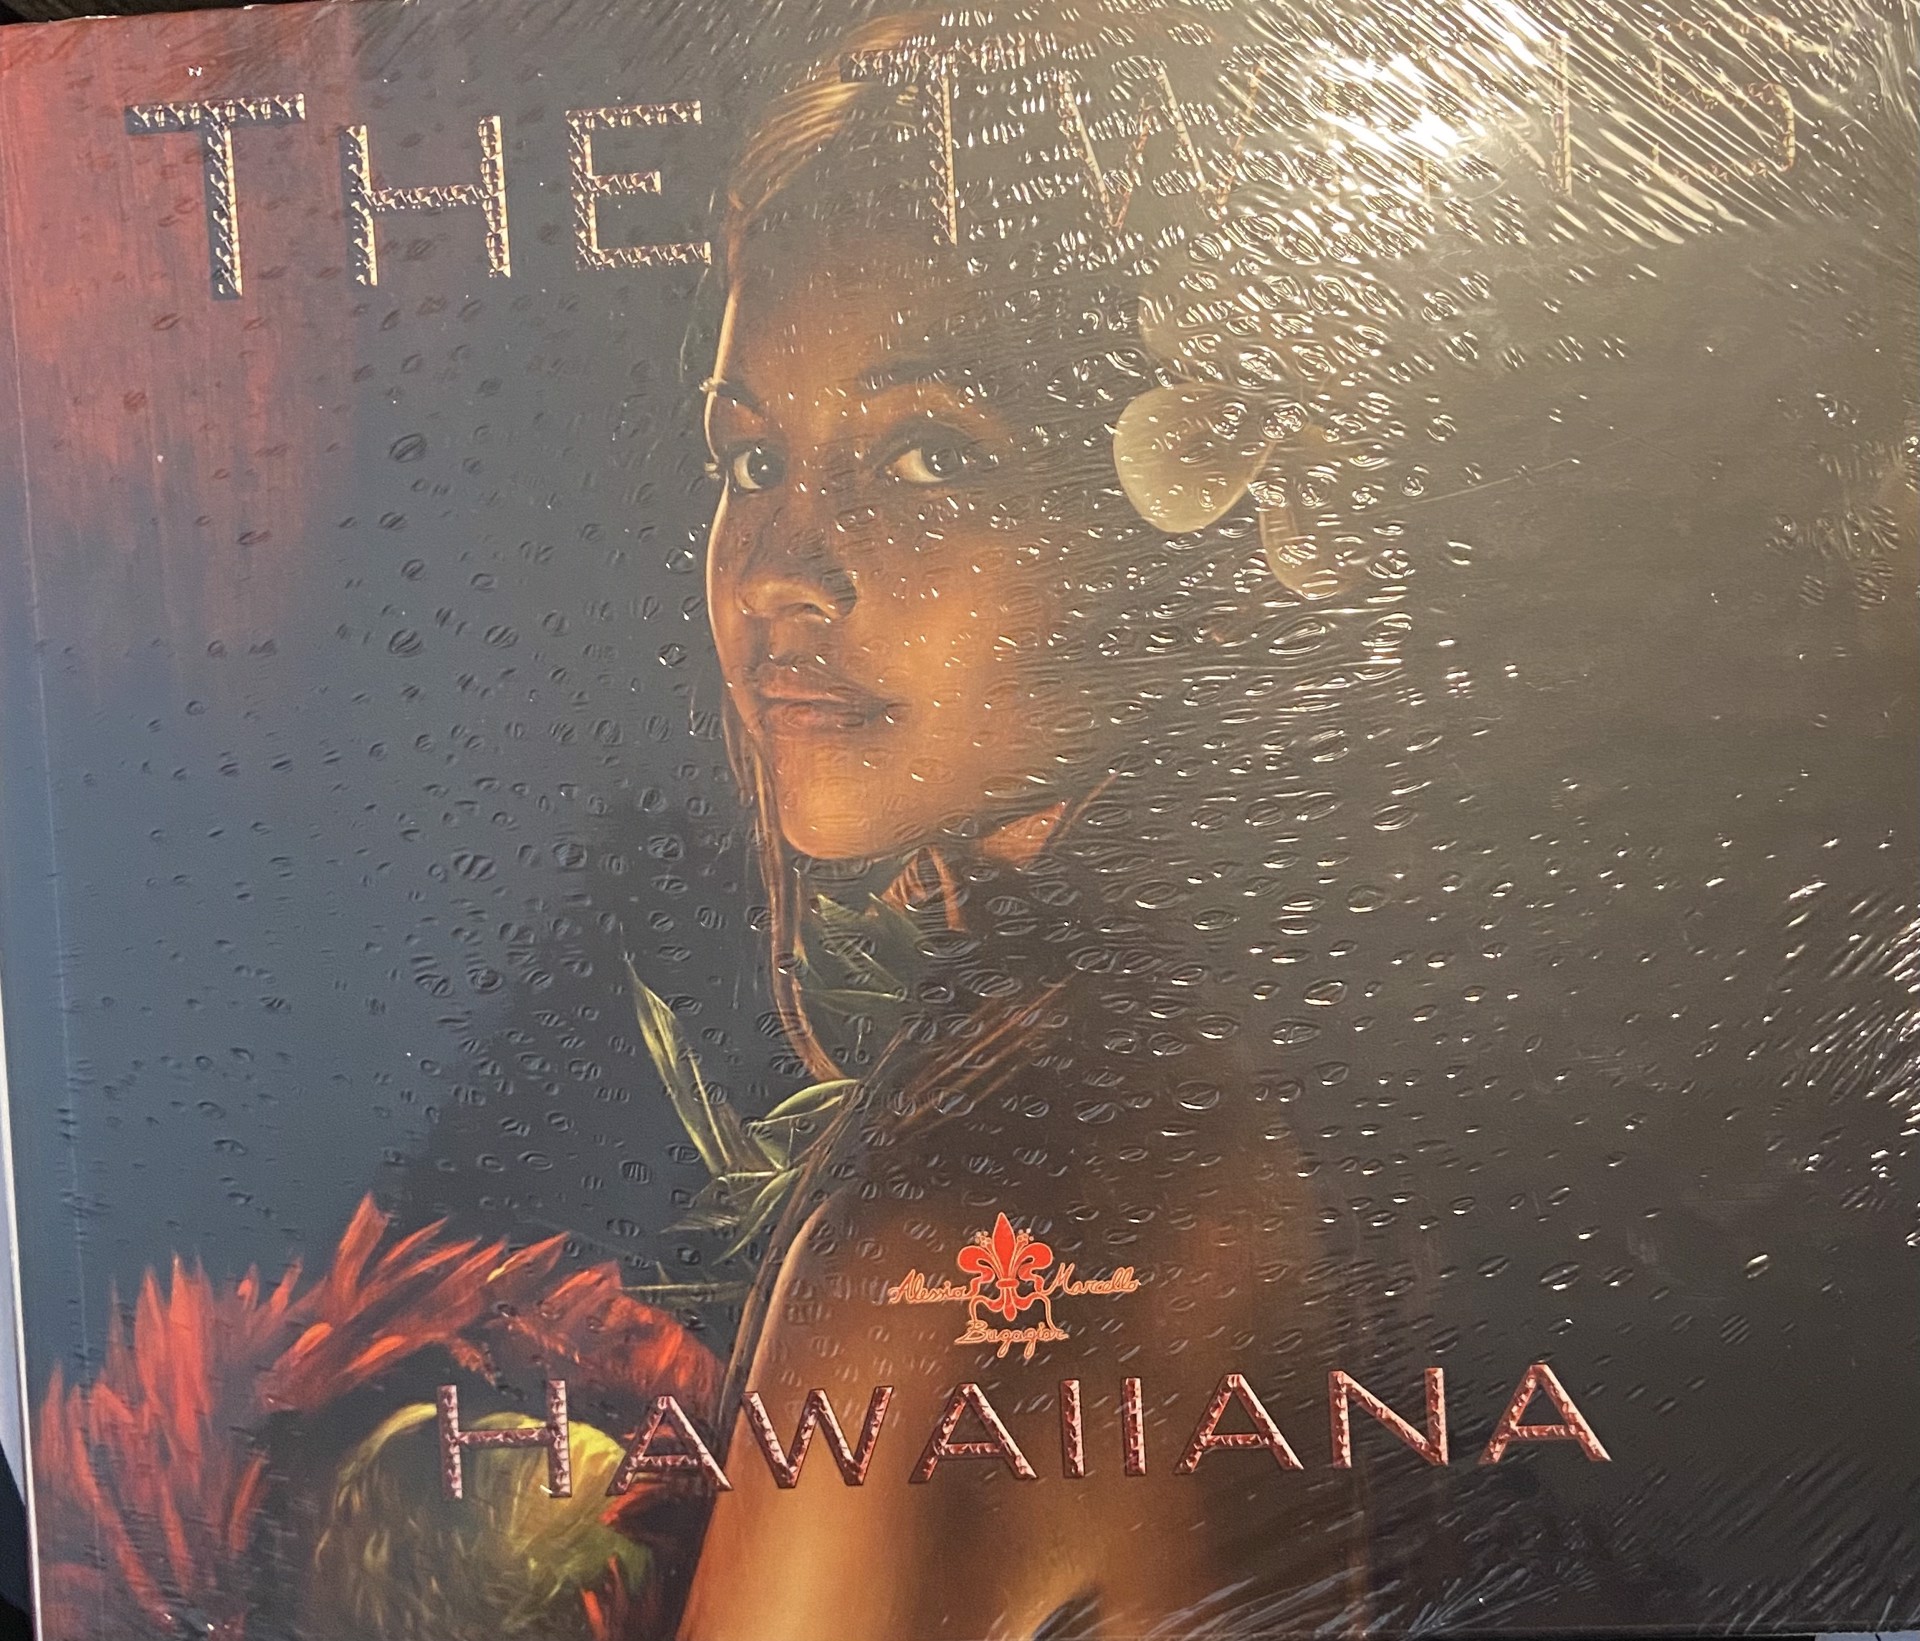 Hawaiiana Book 2021 by The Twins